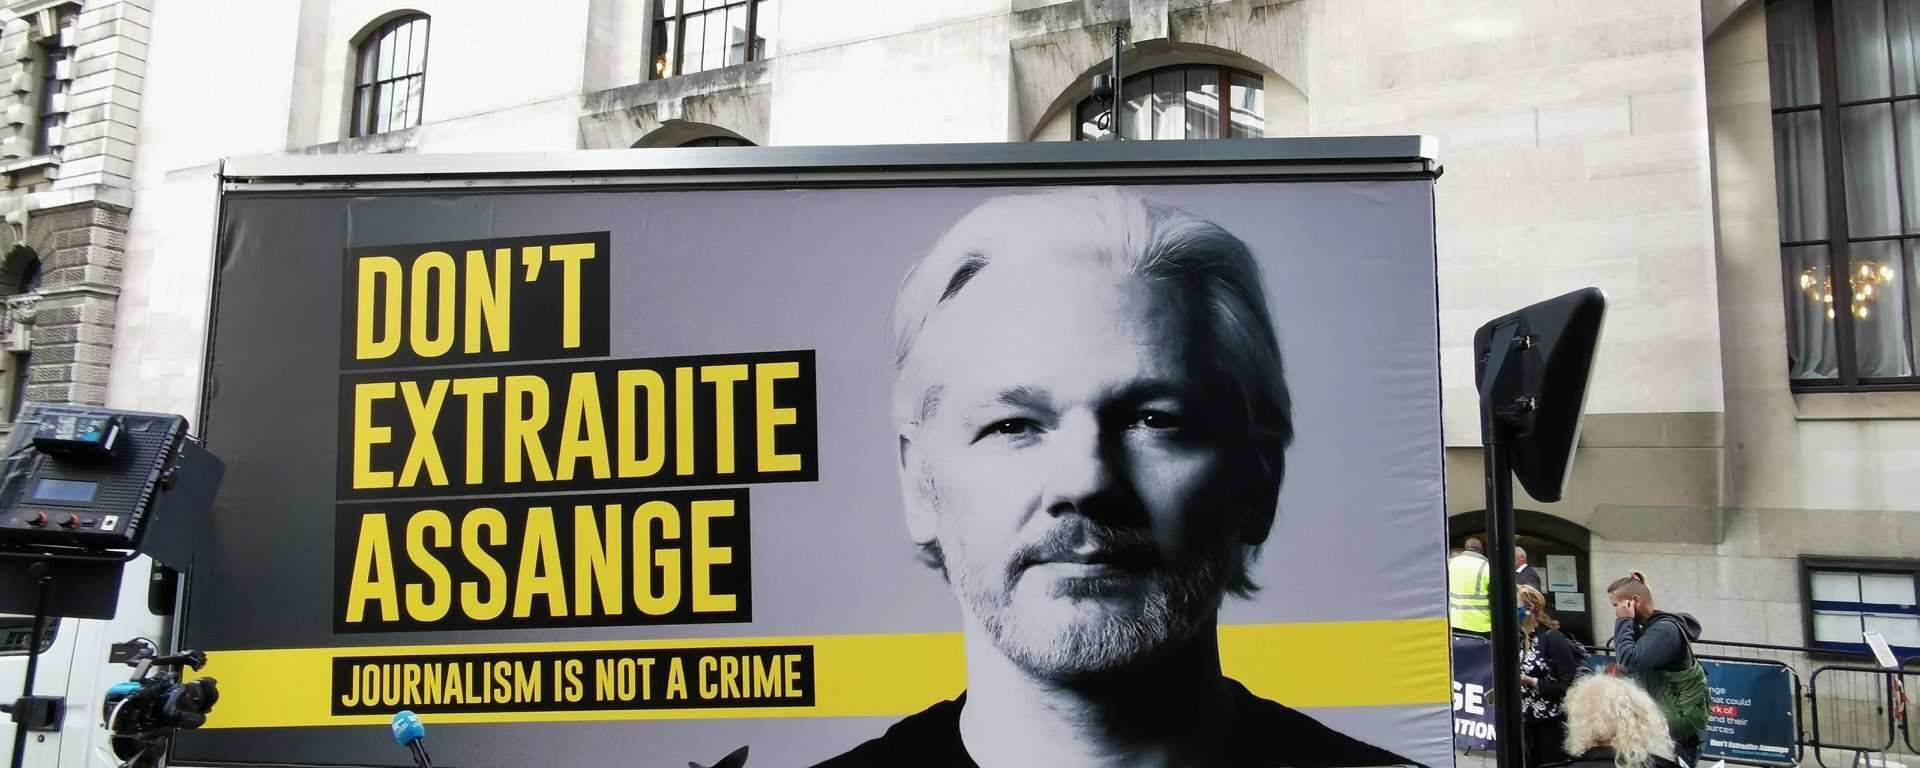 Assange Rally at Old Bailey in London, UK - Sputnik International, 1920, 25.10.2021